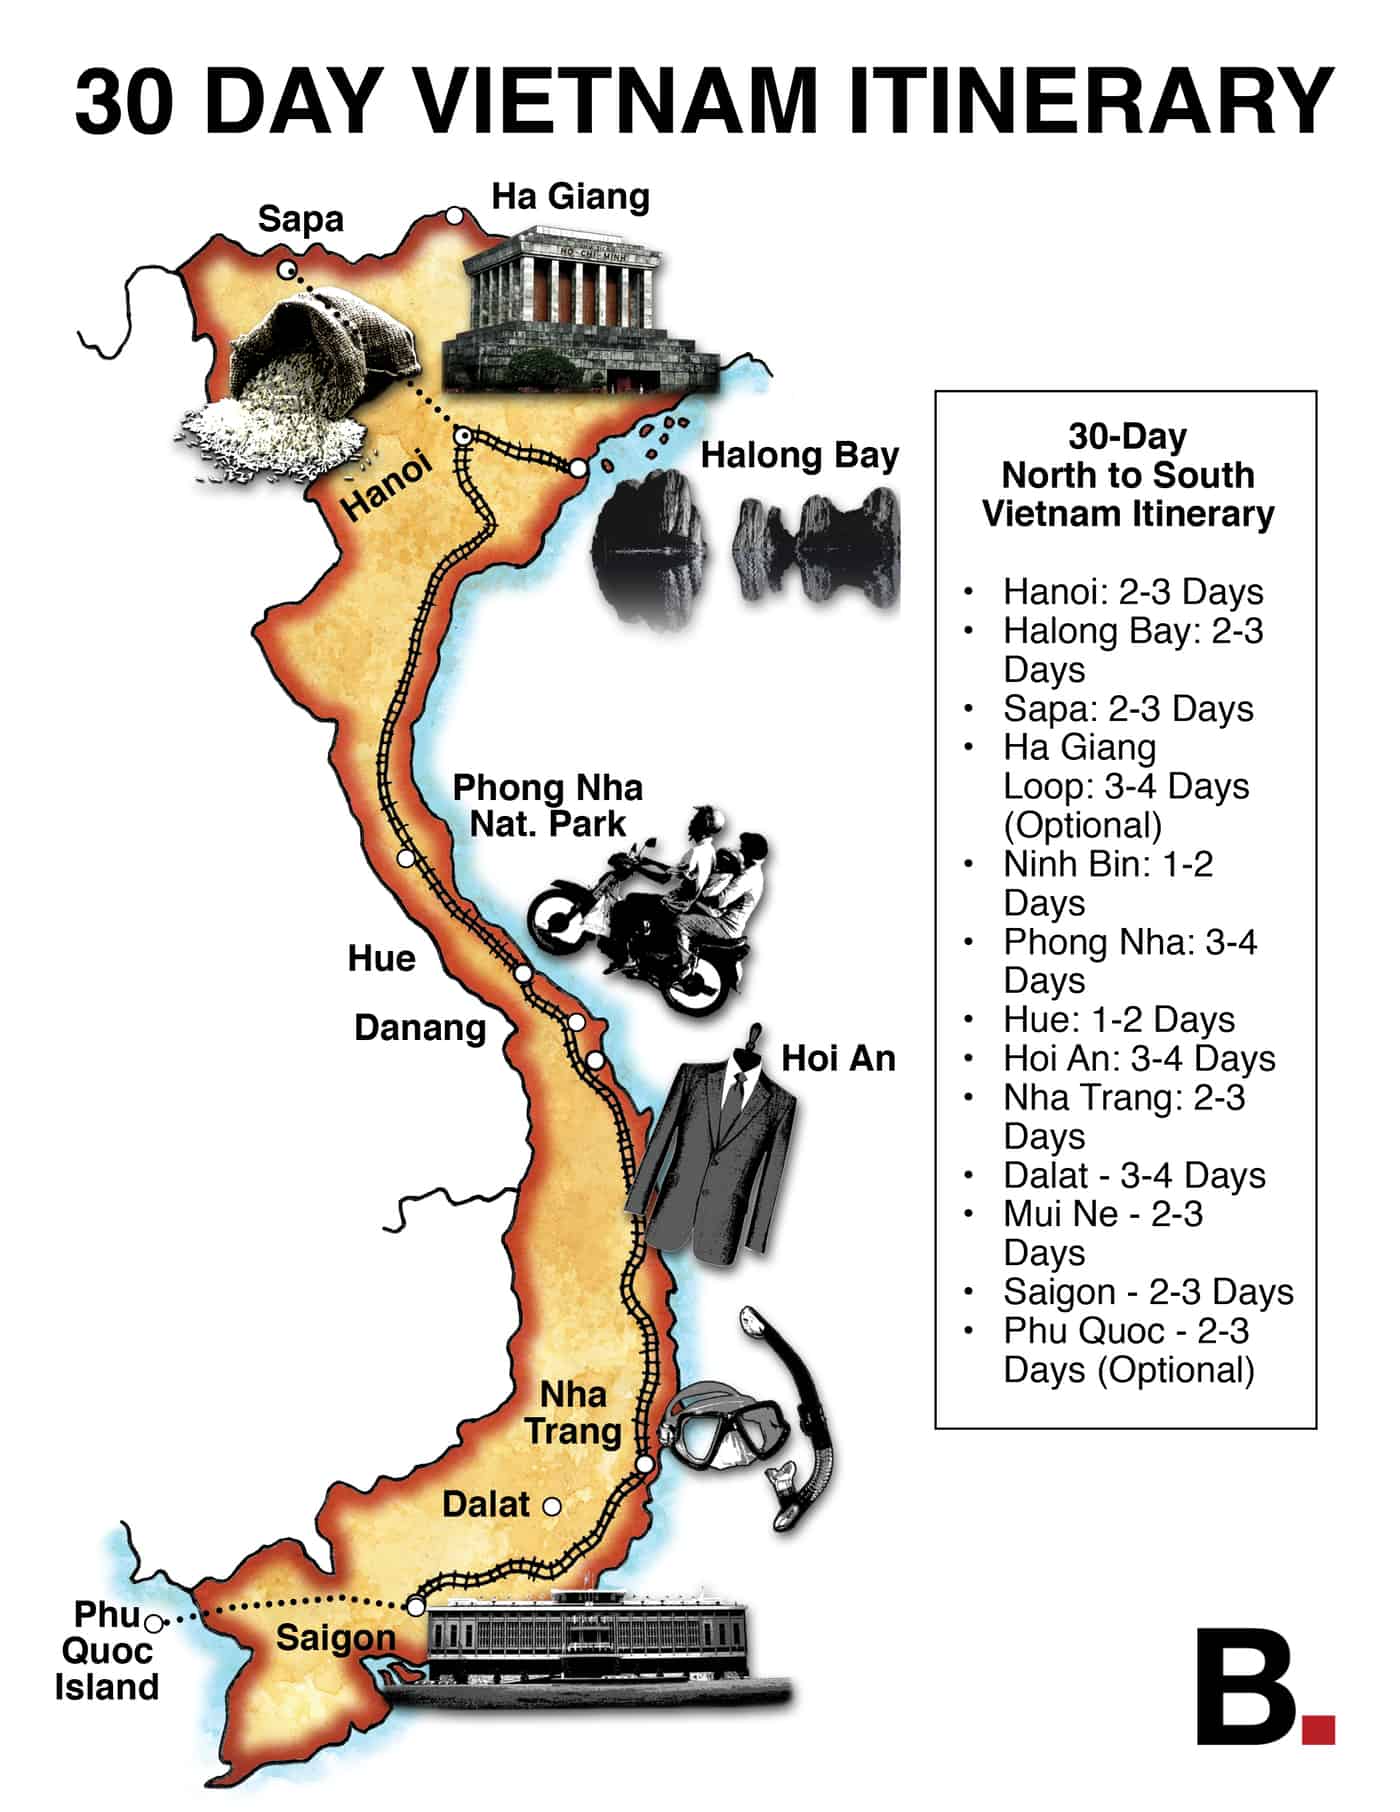 North to South Vietnam Itinerary Vietnam